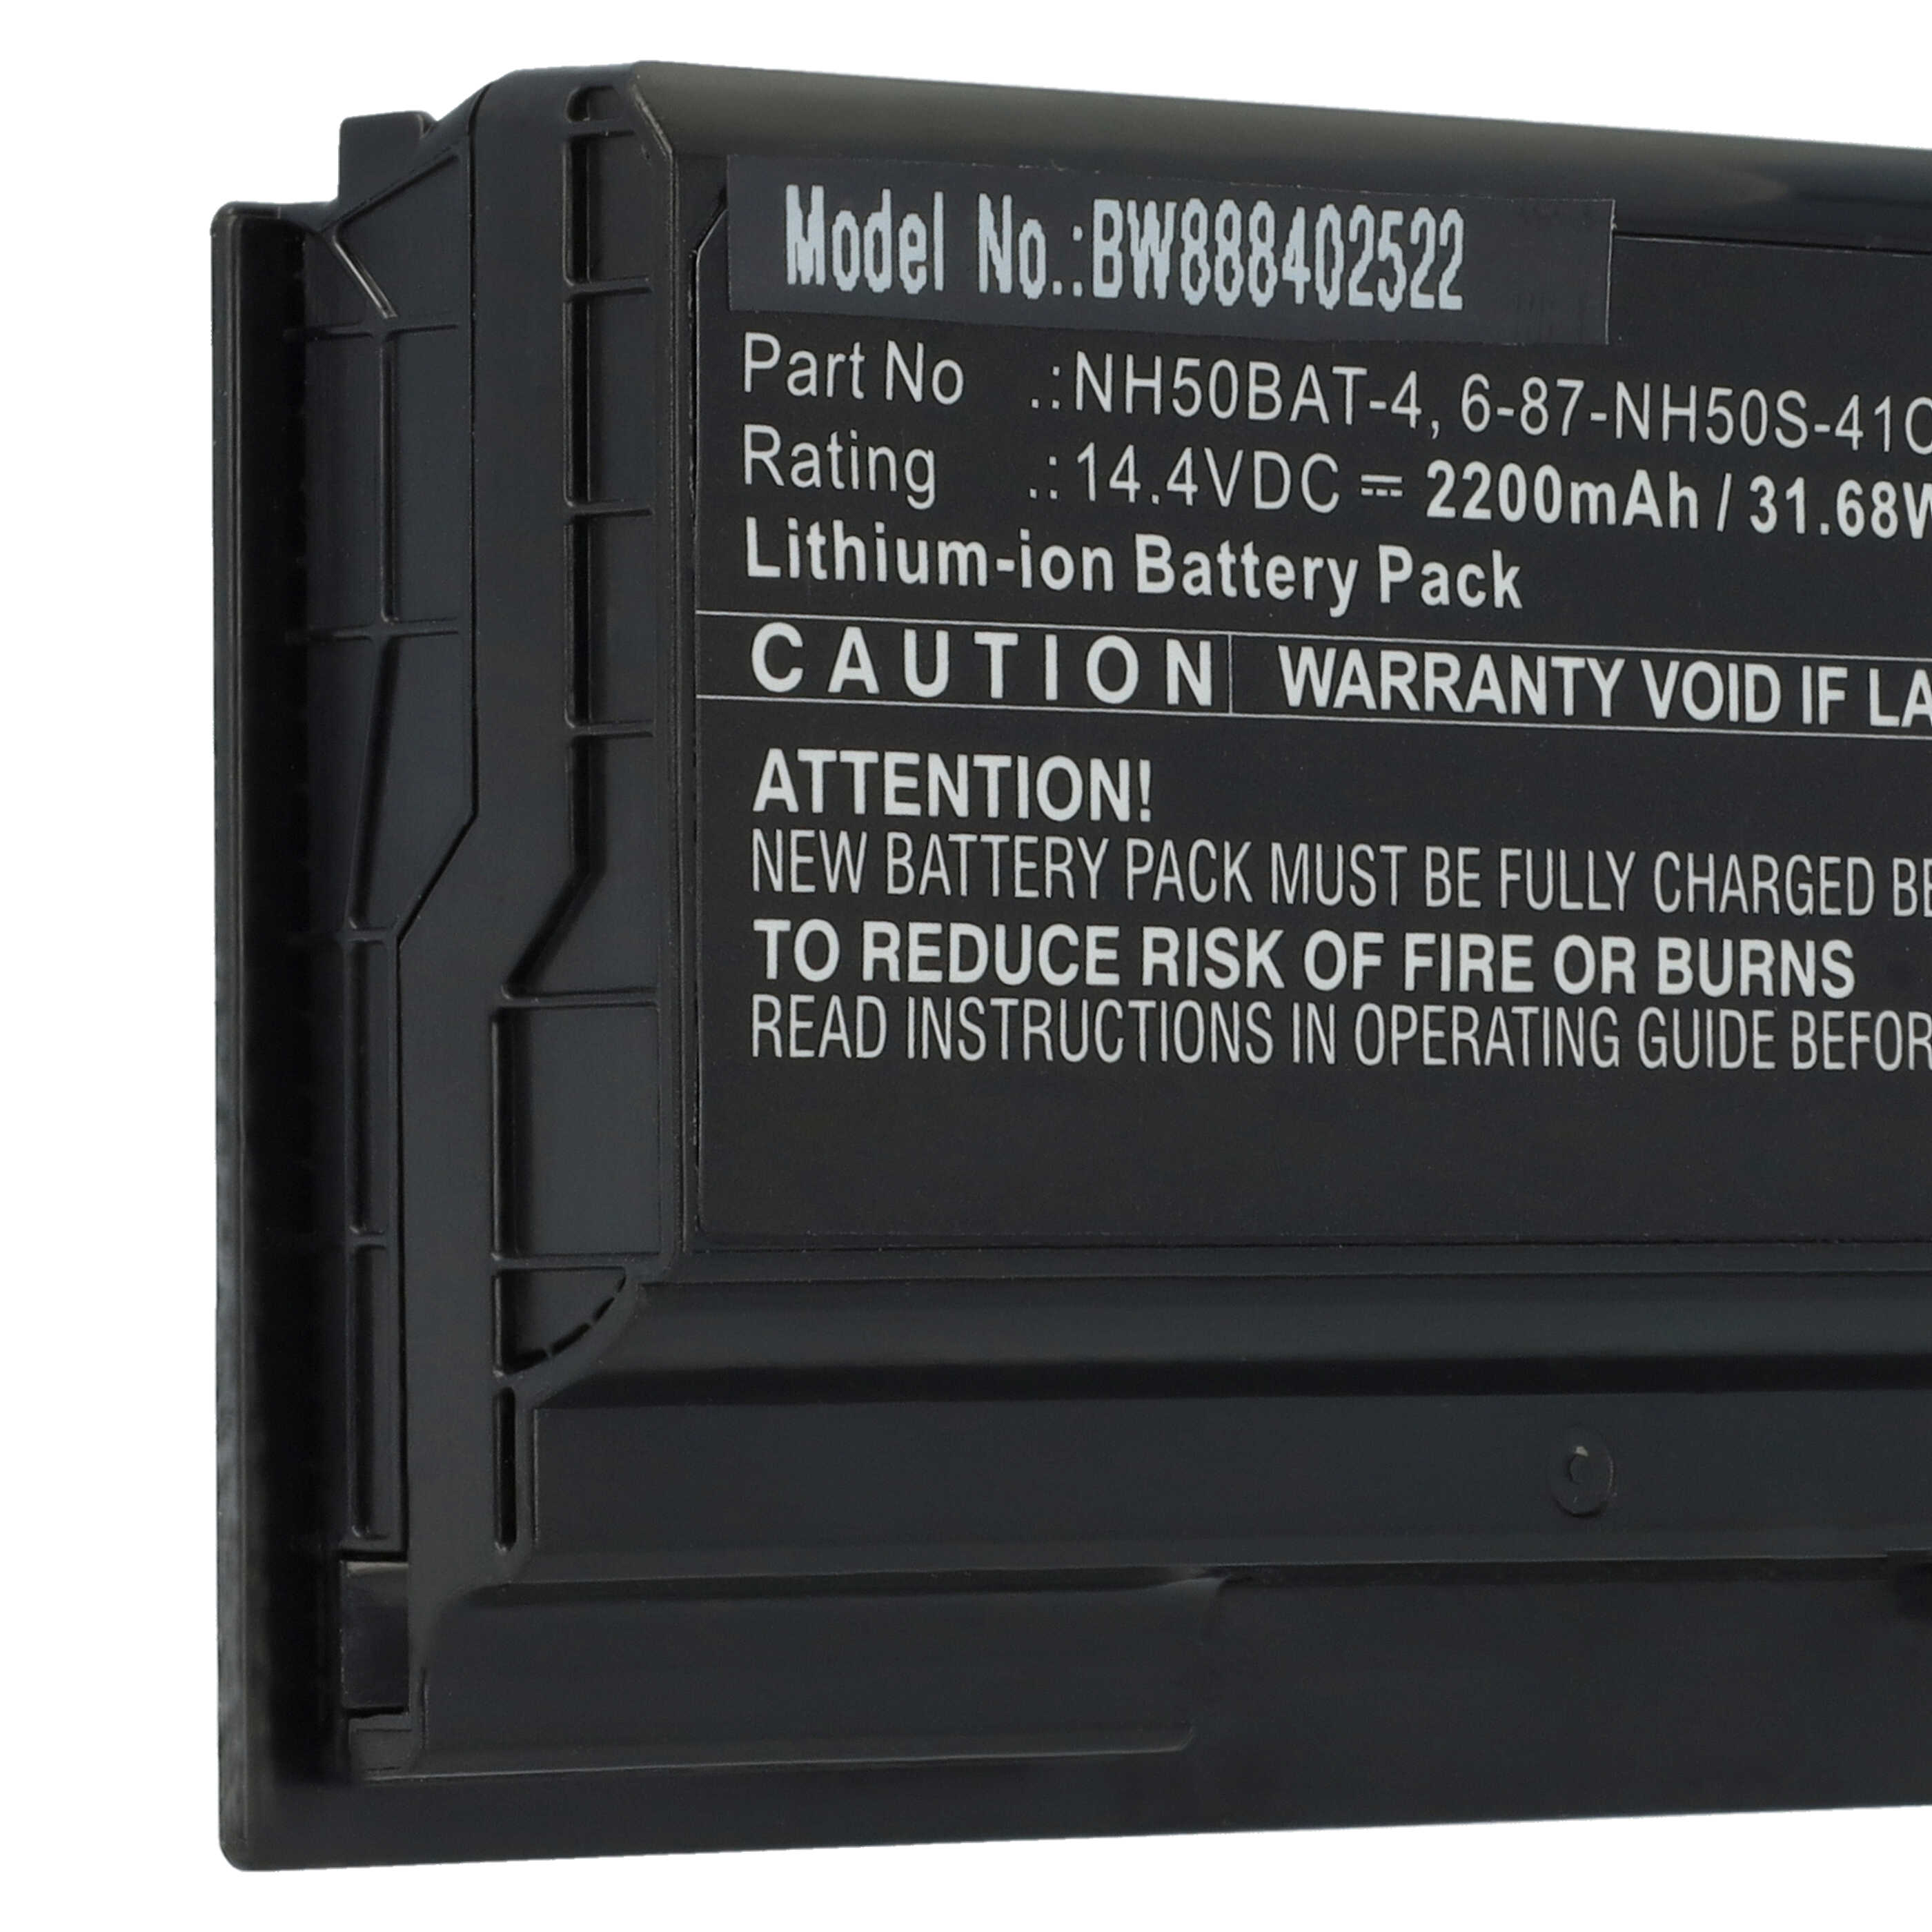 Akumulator do laptopa zamiennik Aorus 6-87-NH50S-41C00, NH50BAT-4 - 2200 mAh 14,4 V Li-Ion